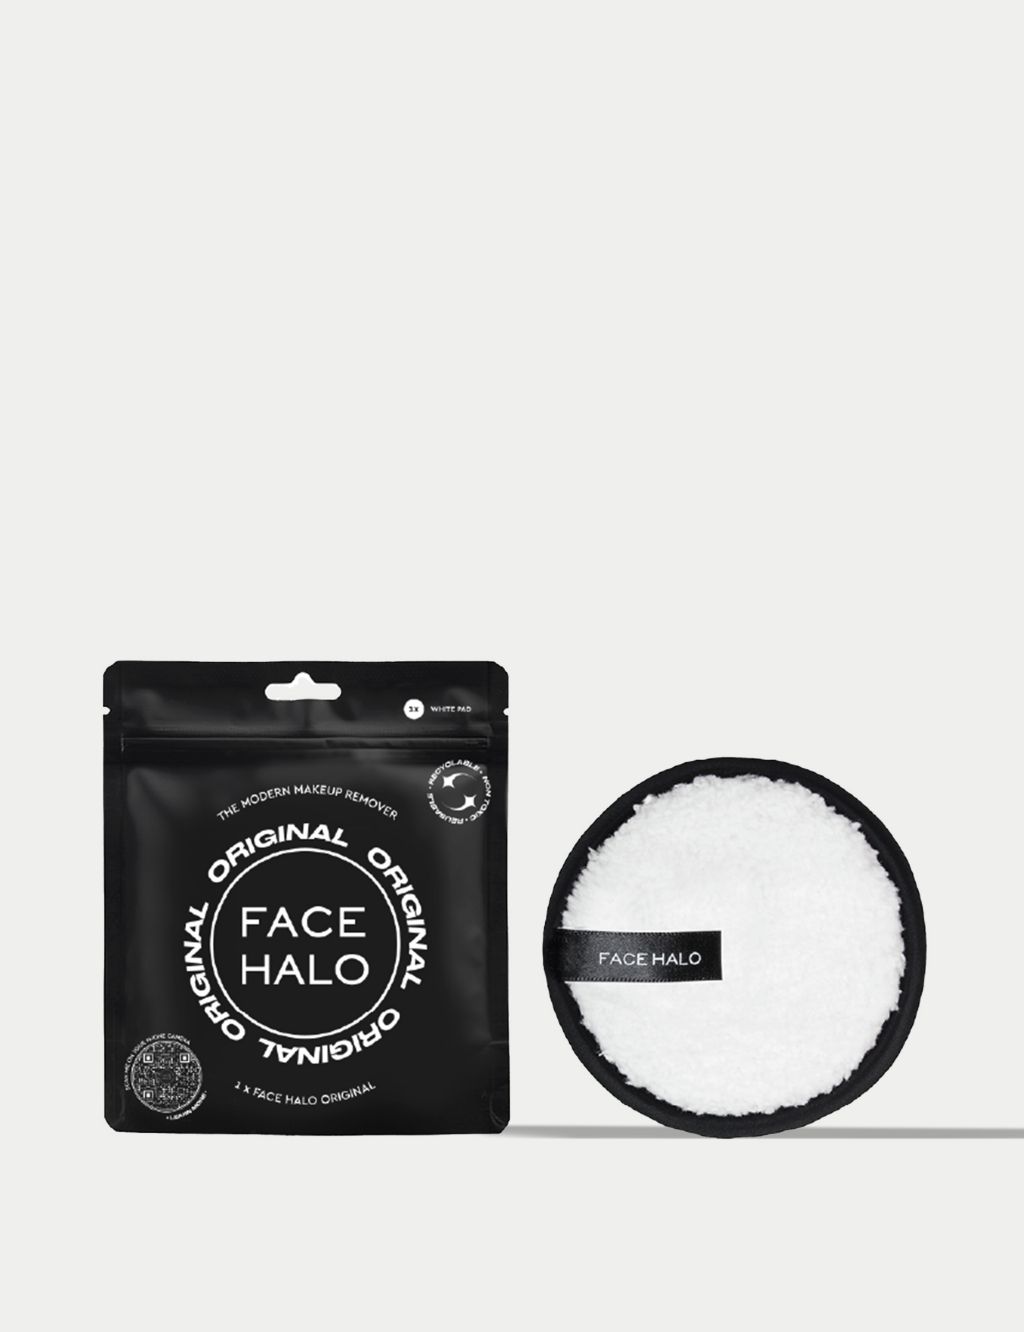 Face Halo Original 1-Pack 3 of 4